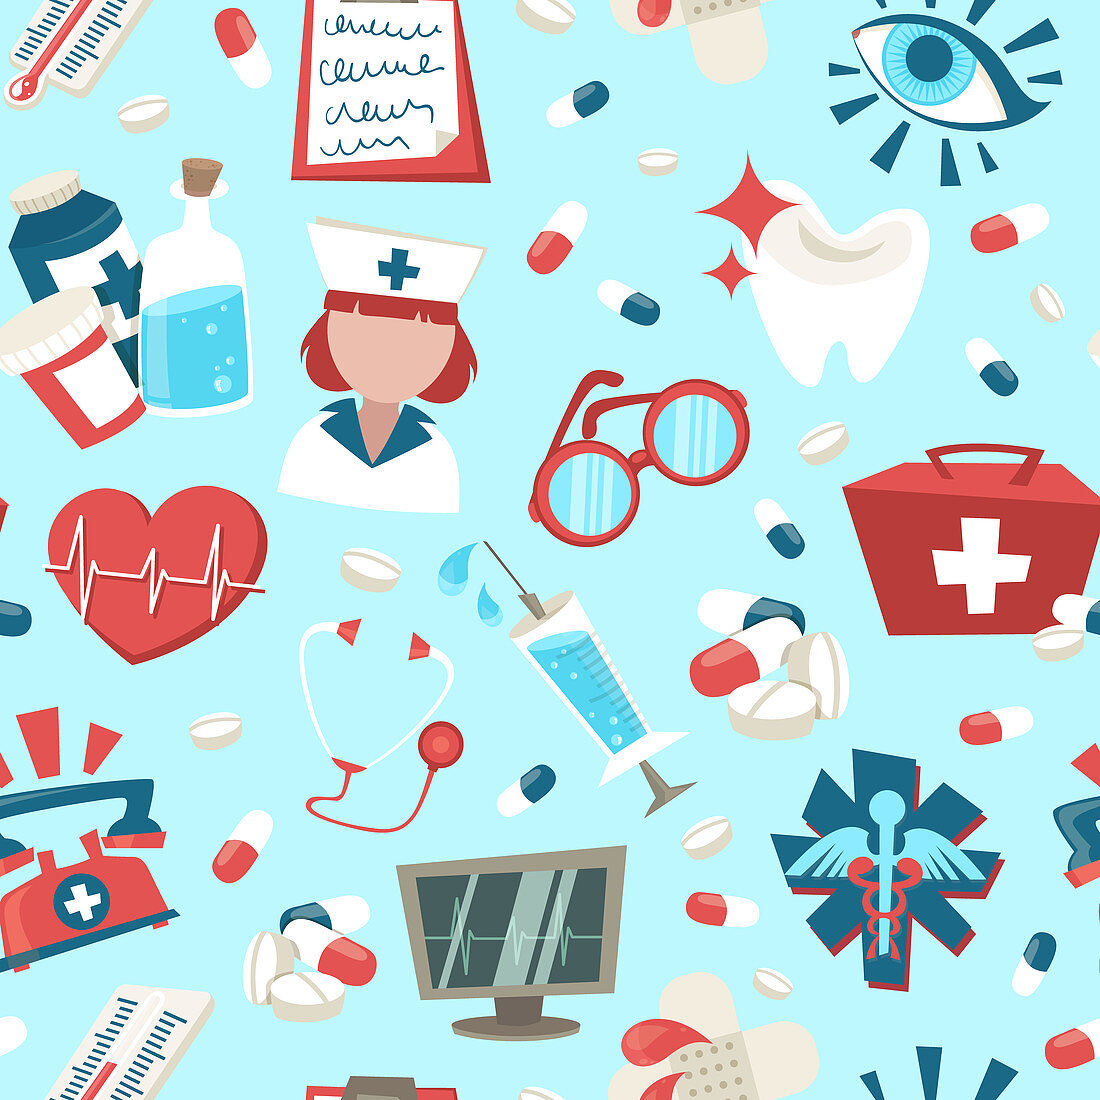 Healthcare, illustration